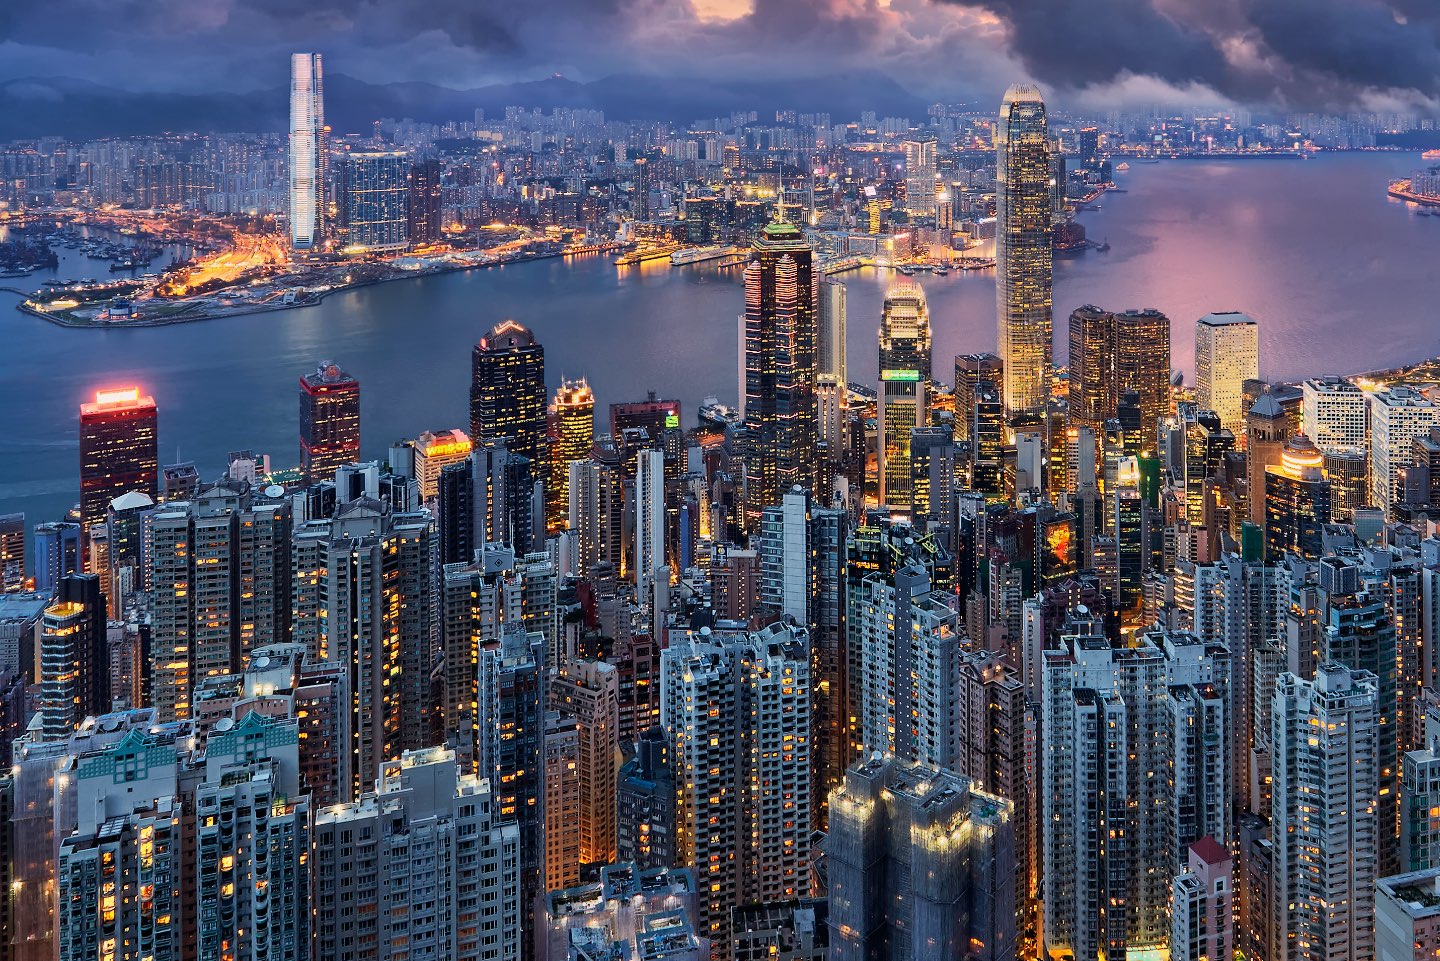 International Business Guides - Hong Kong, Global Commercial Banking